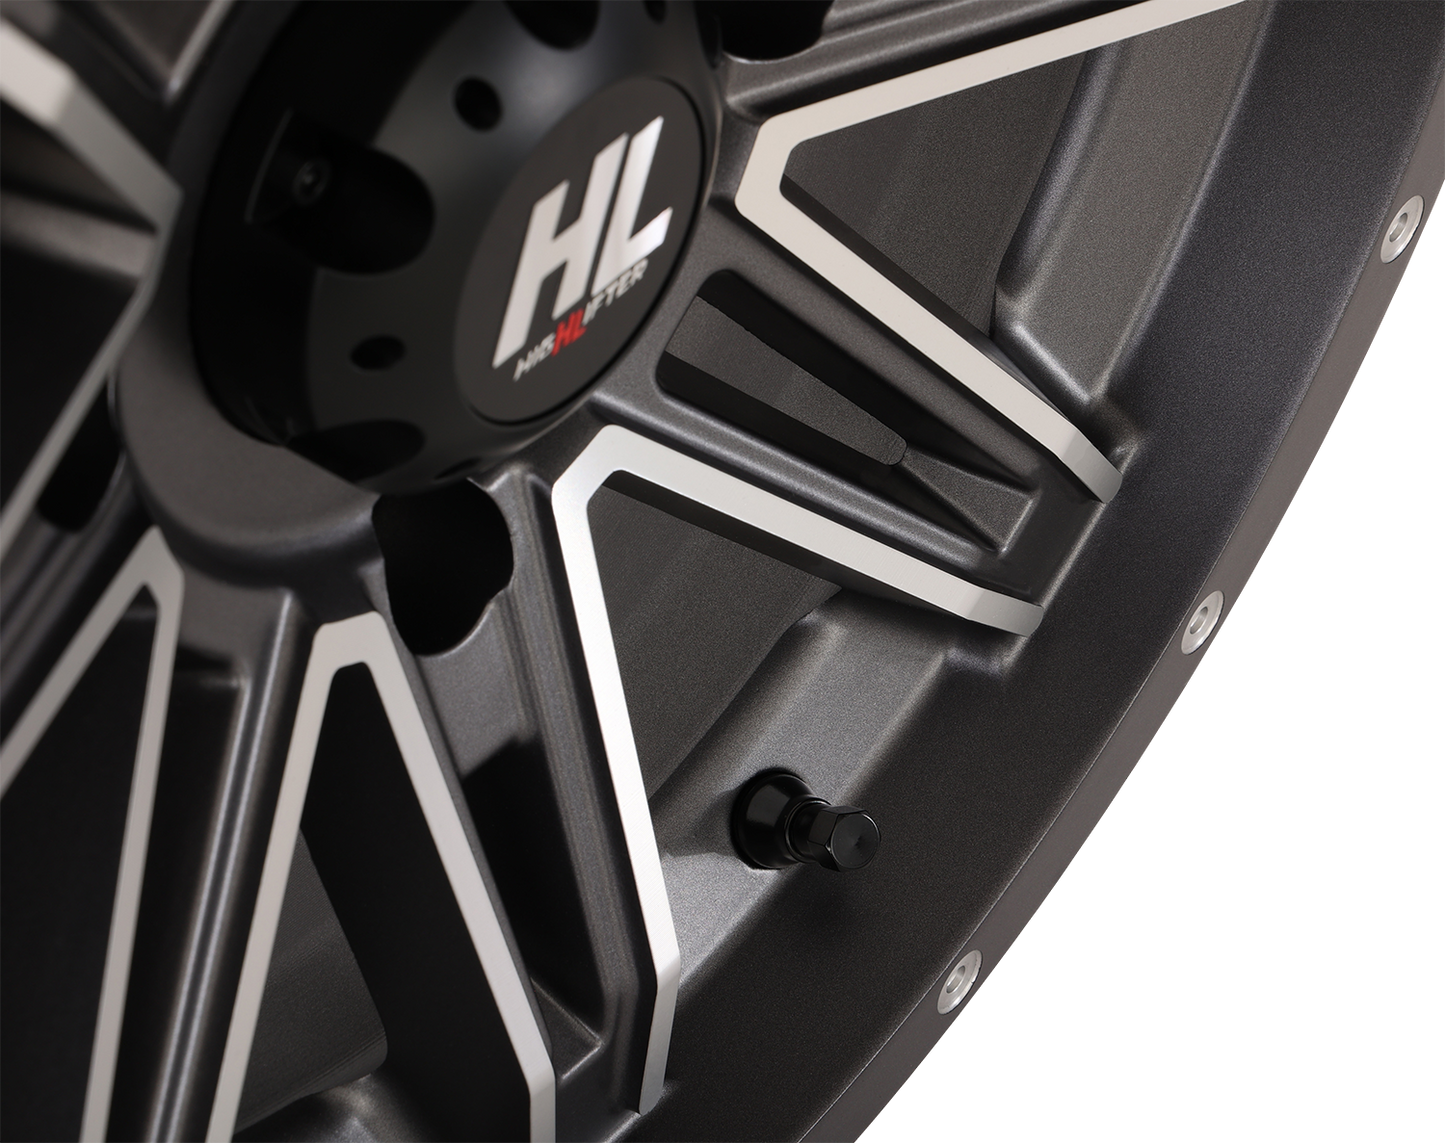 HIGH LIFTER Wheel - HL22 - Front/Rear - Gloss Black w/Machined - 14x7 - 4/156 - 4+3 (+10 mm) 14HL22-1156